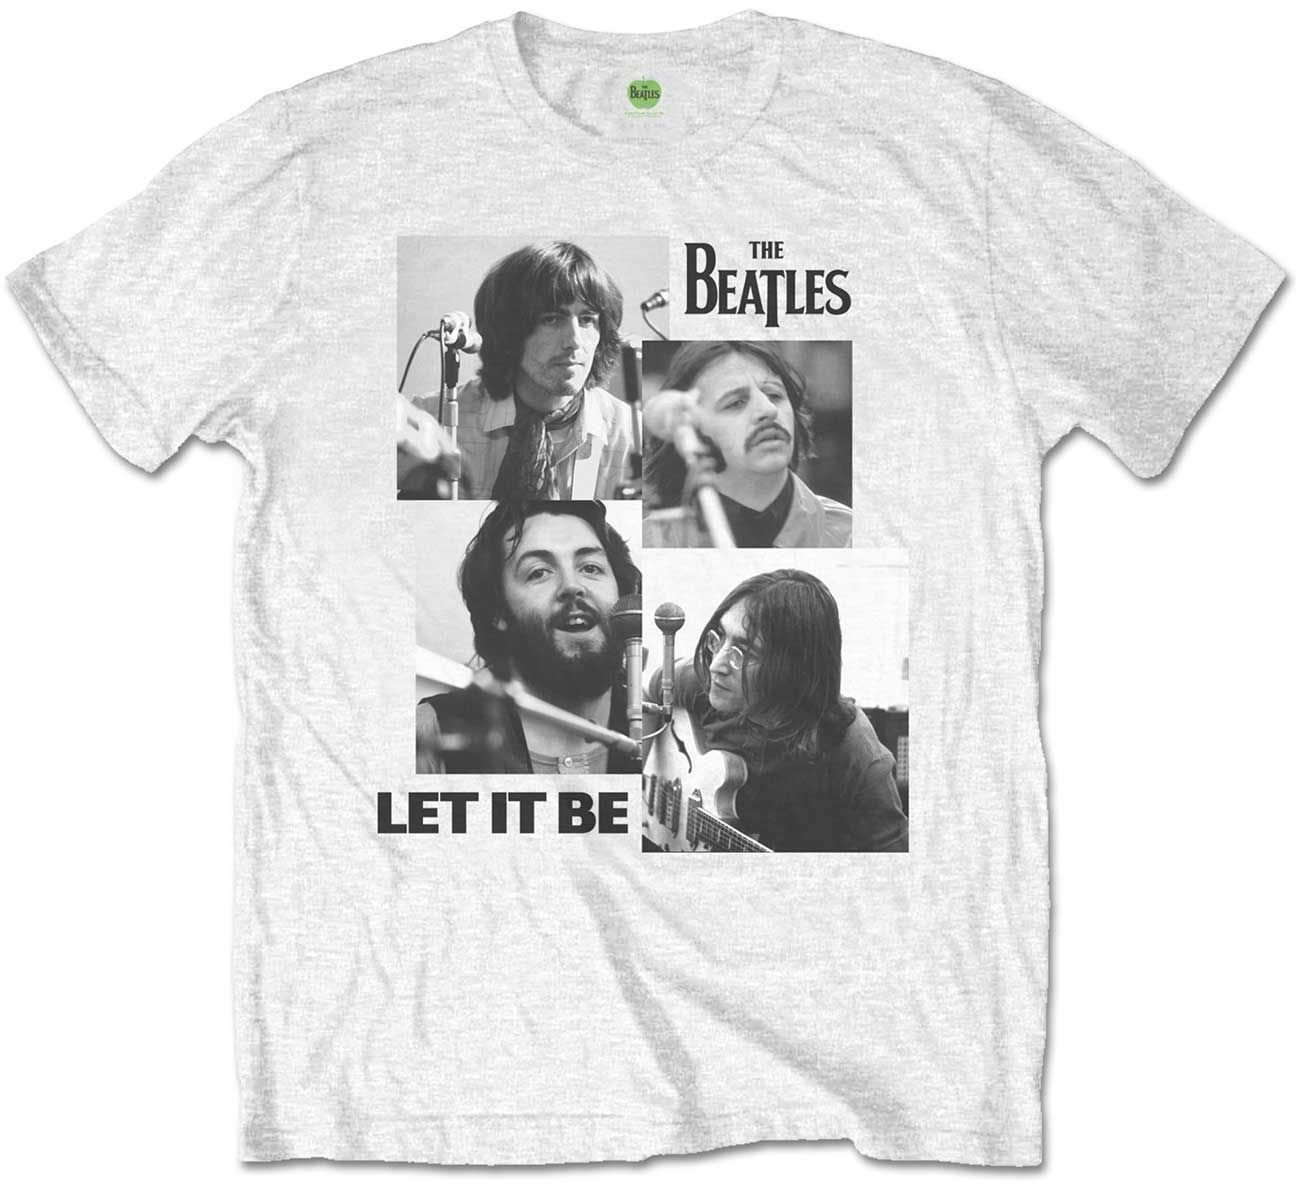 Shirt The Beatles Shirt Let it Be White XL